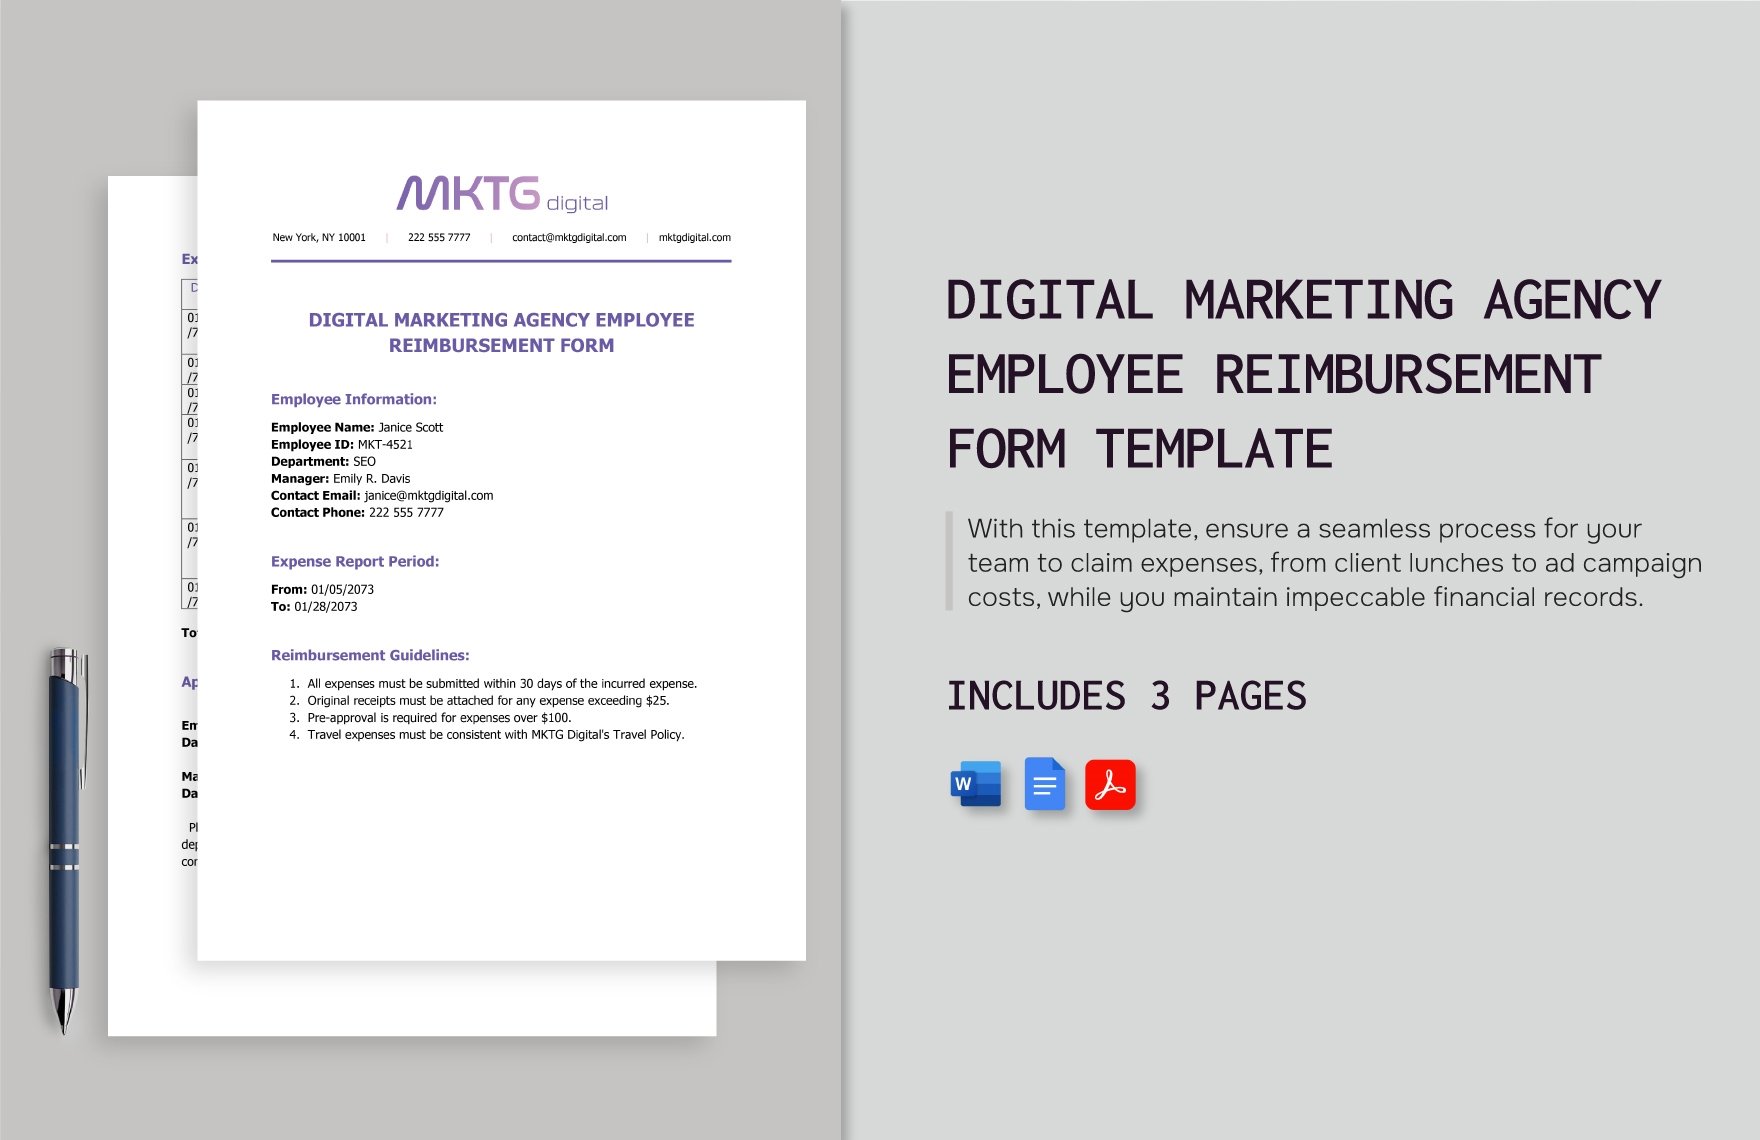 Free Digital Marketing Agency Employee Reimbursement Form Template in Word, Google Docs, PDF